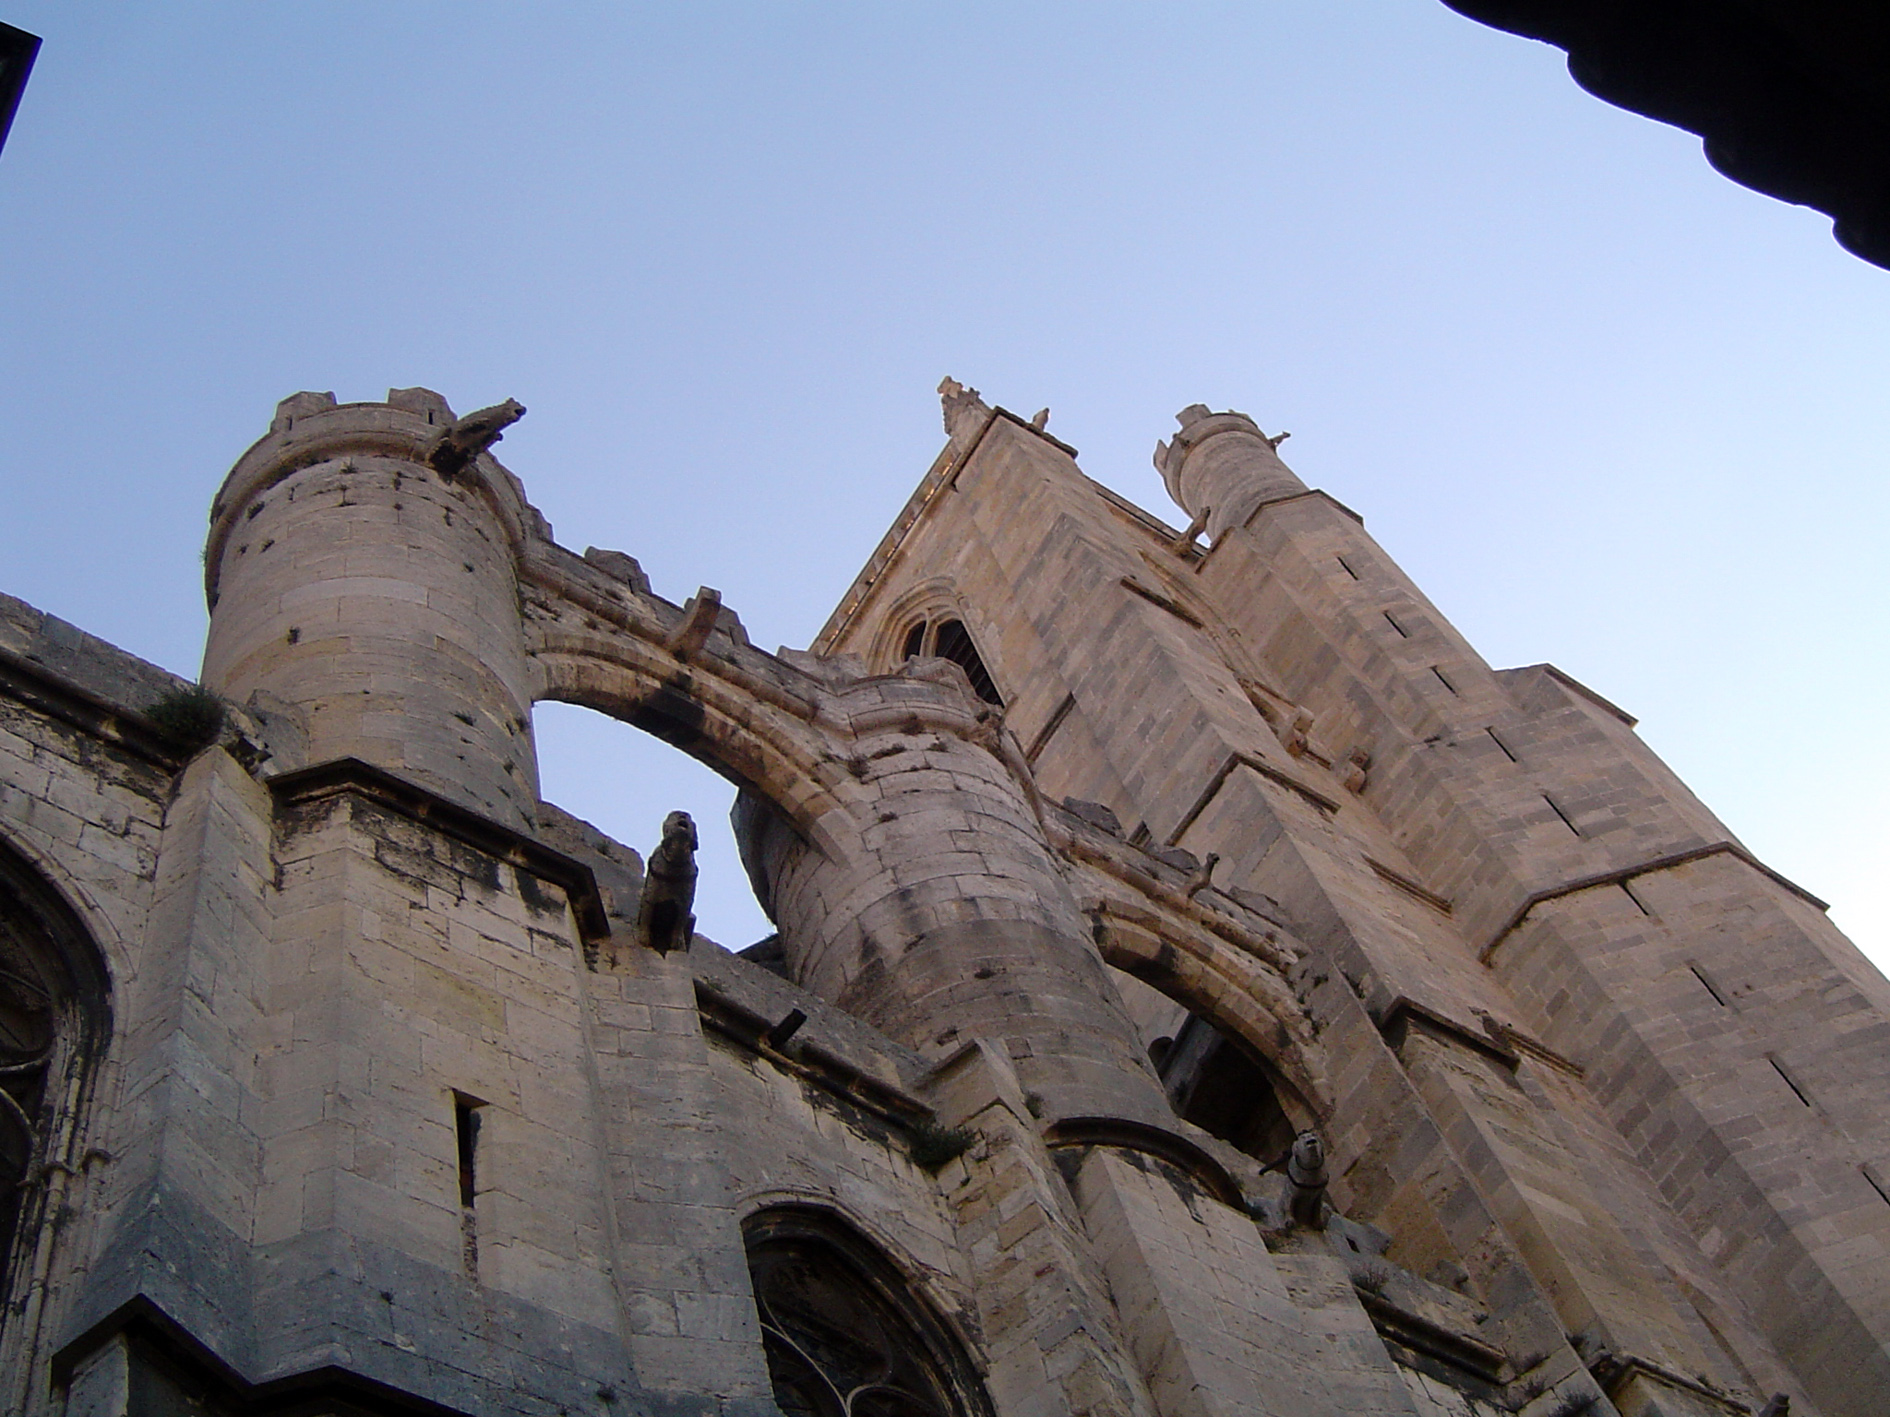 28.08.2009 Un aspecte de la majestuosa catedral de Sant Just i Pastor.  Narbona -  Jordi Bibià